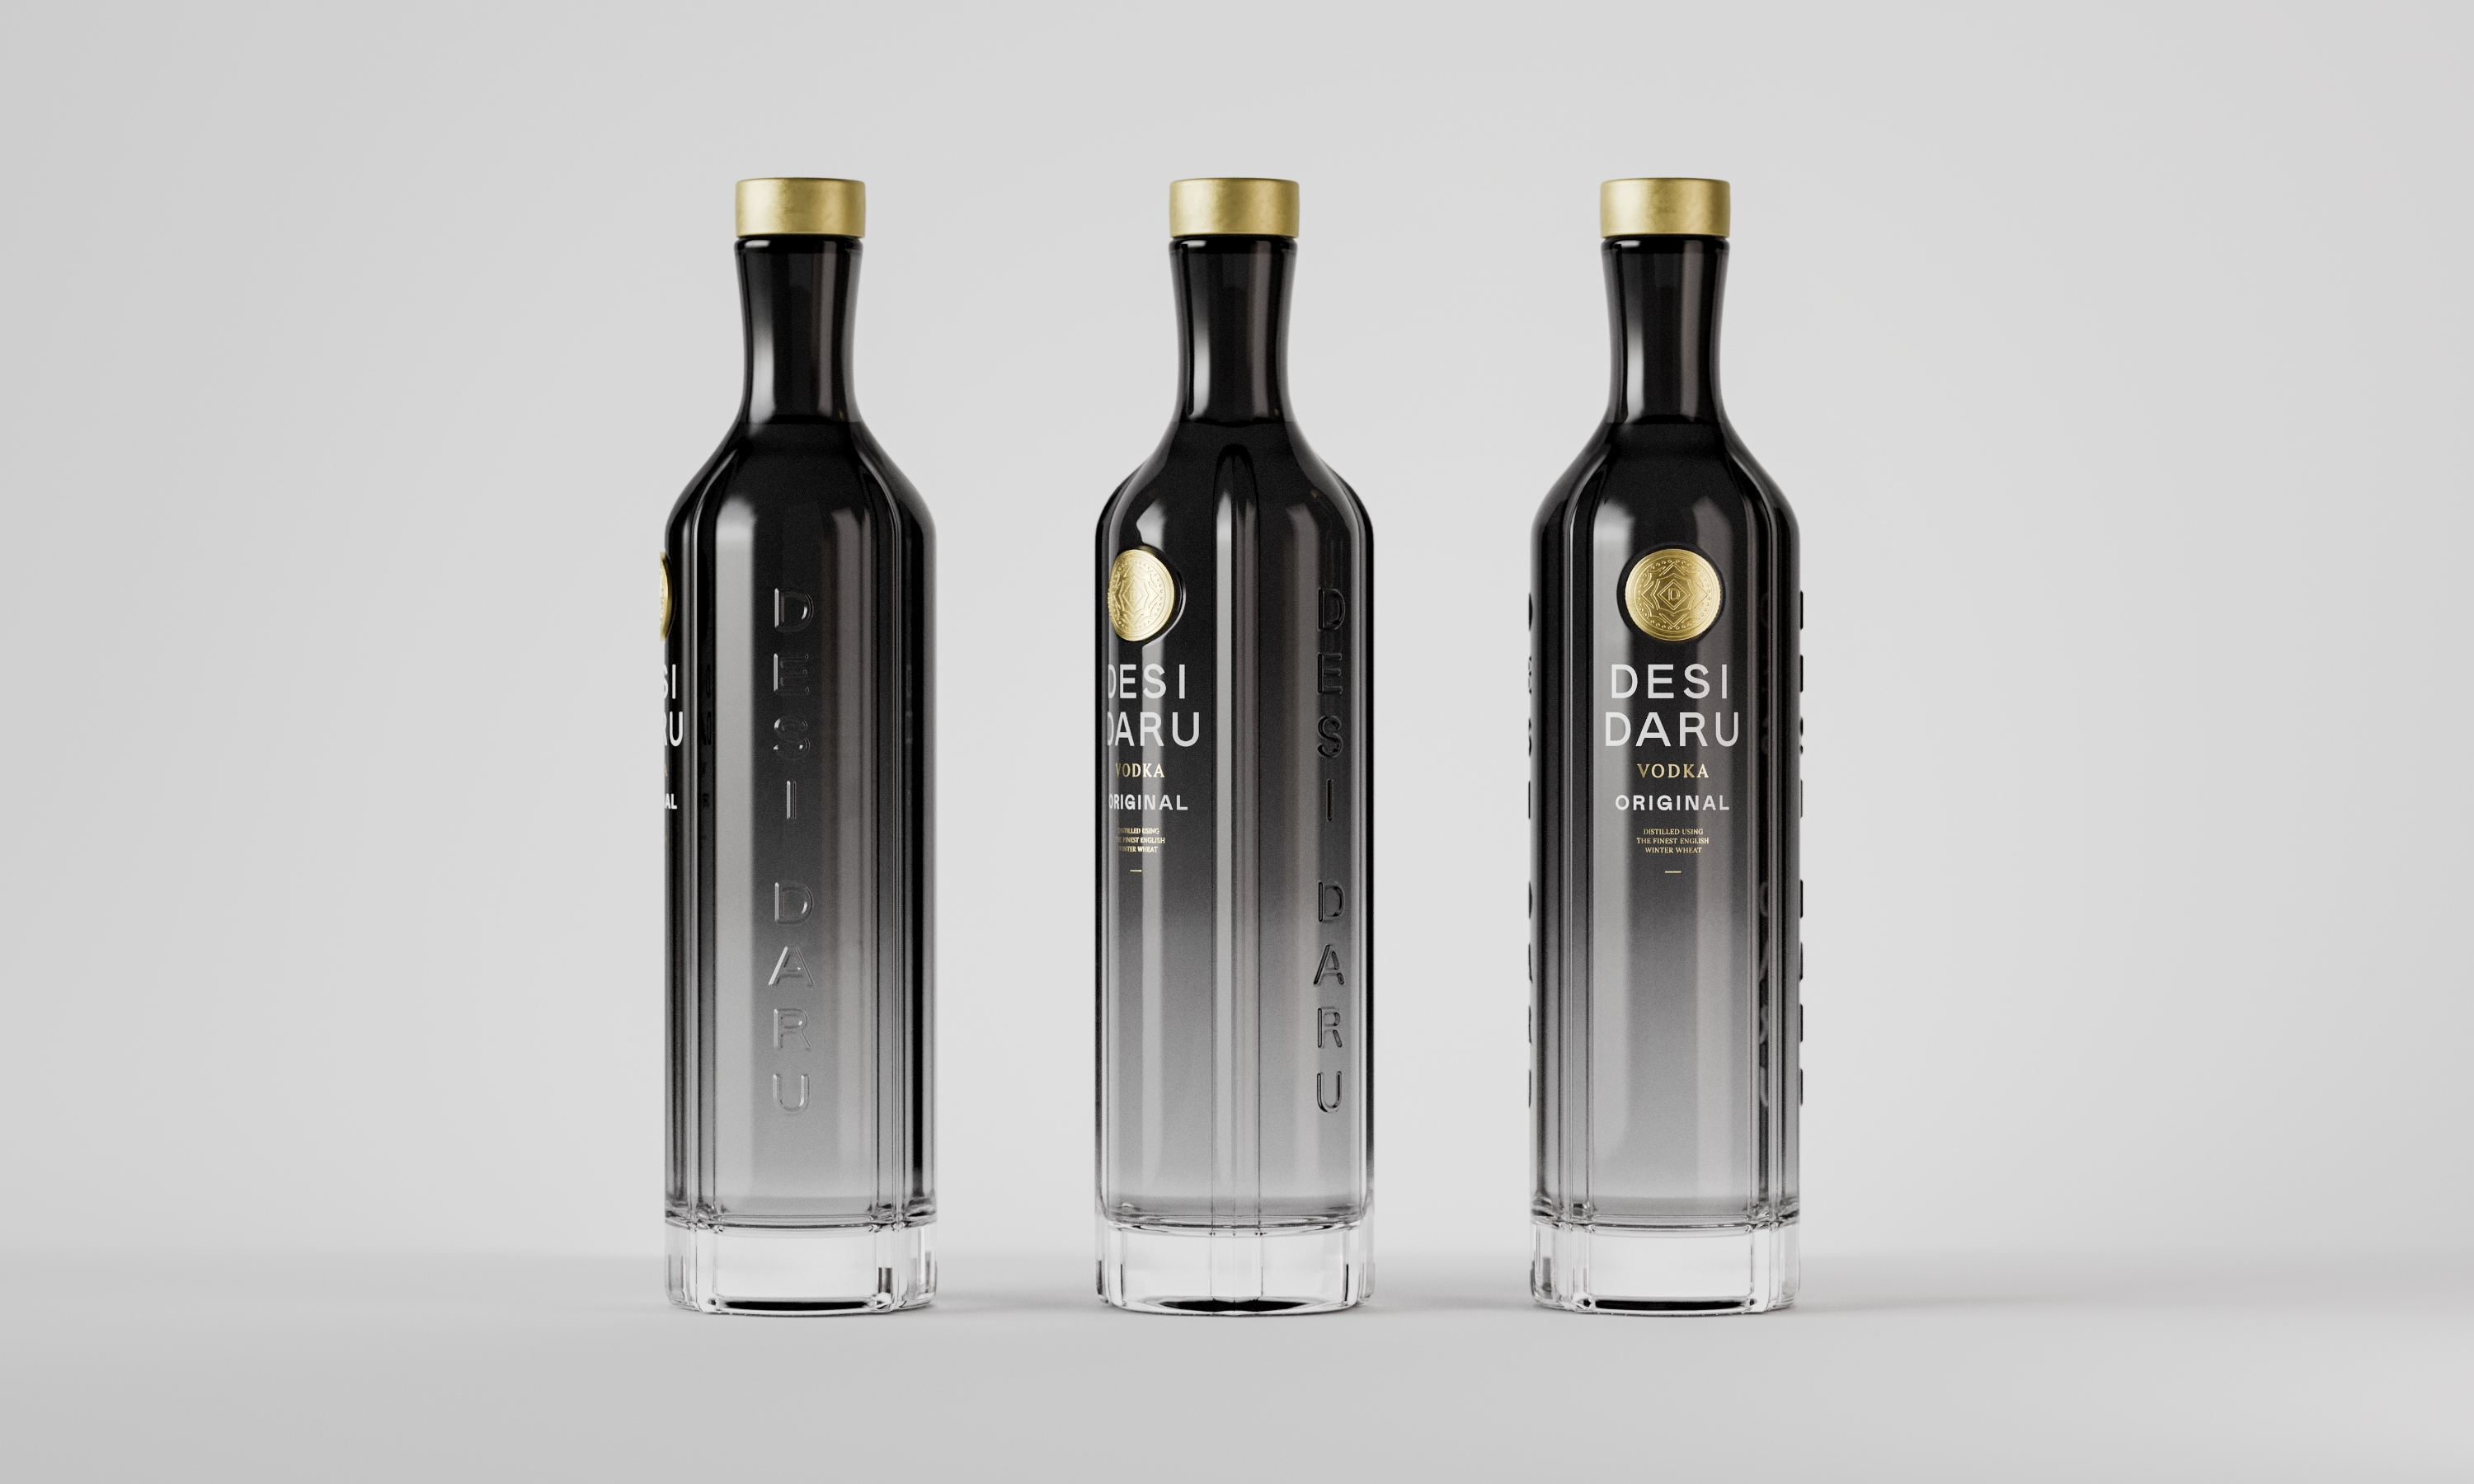 Desi Daru Vodka: Celebrating Fusion in an Ultra-Premium Bottle Created by Ed Bell Design